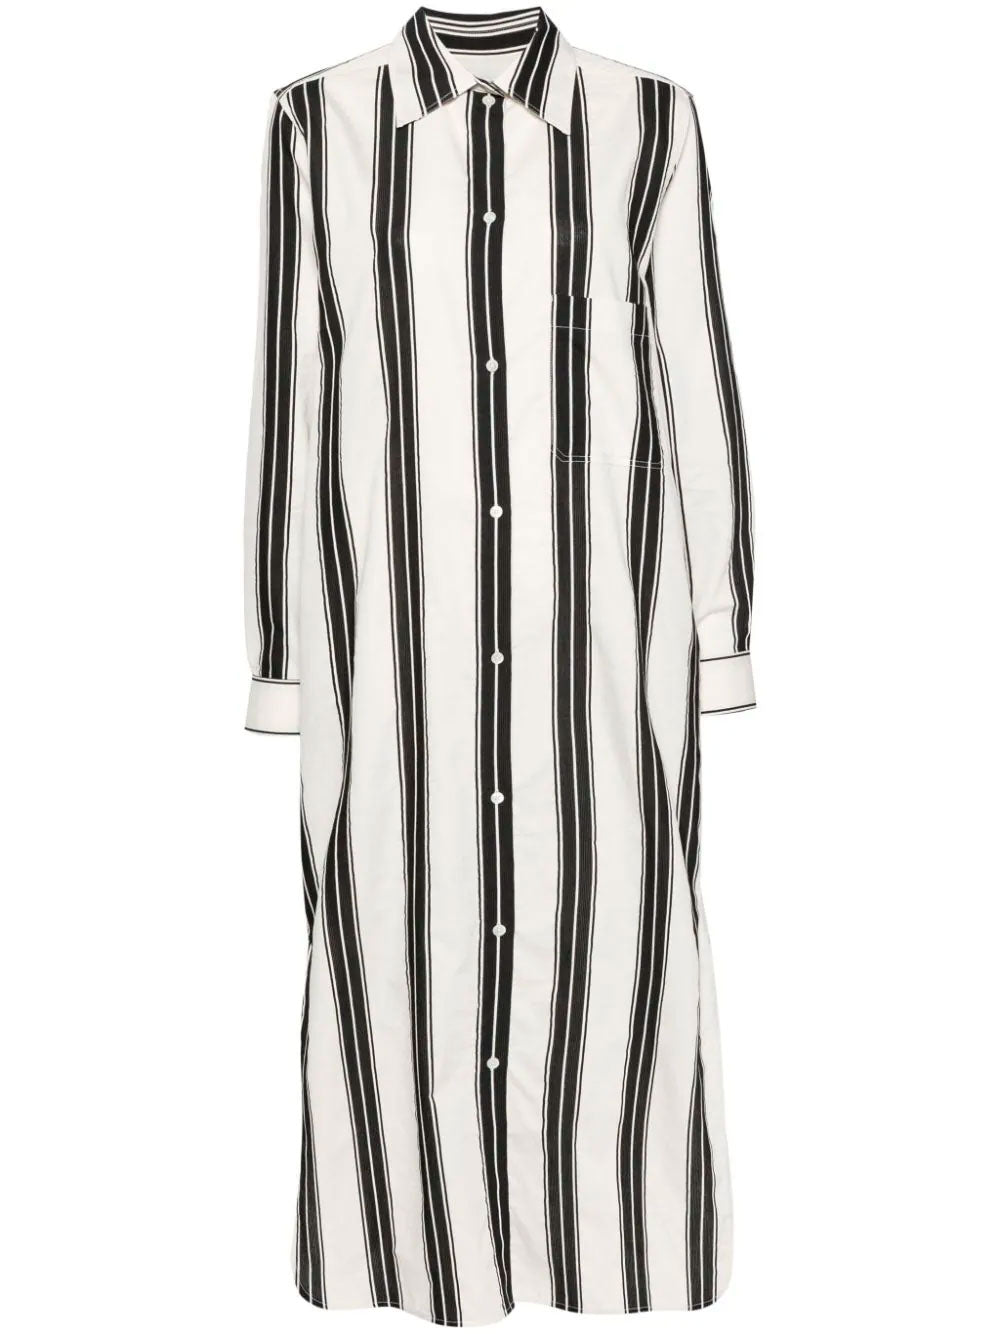 Striped tunic dress